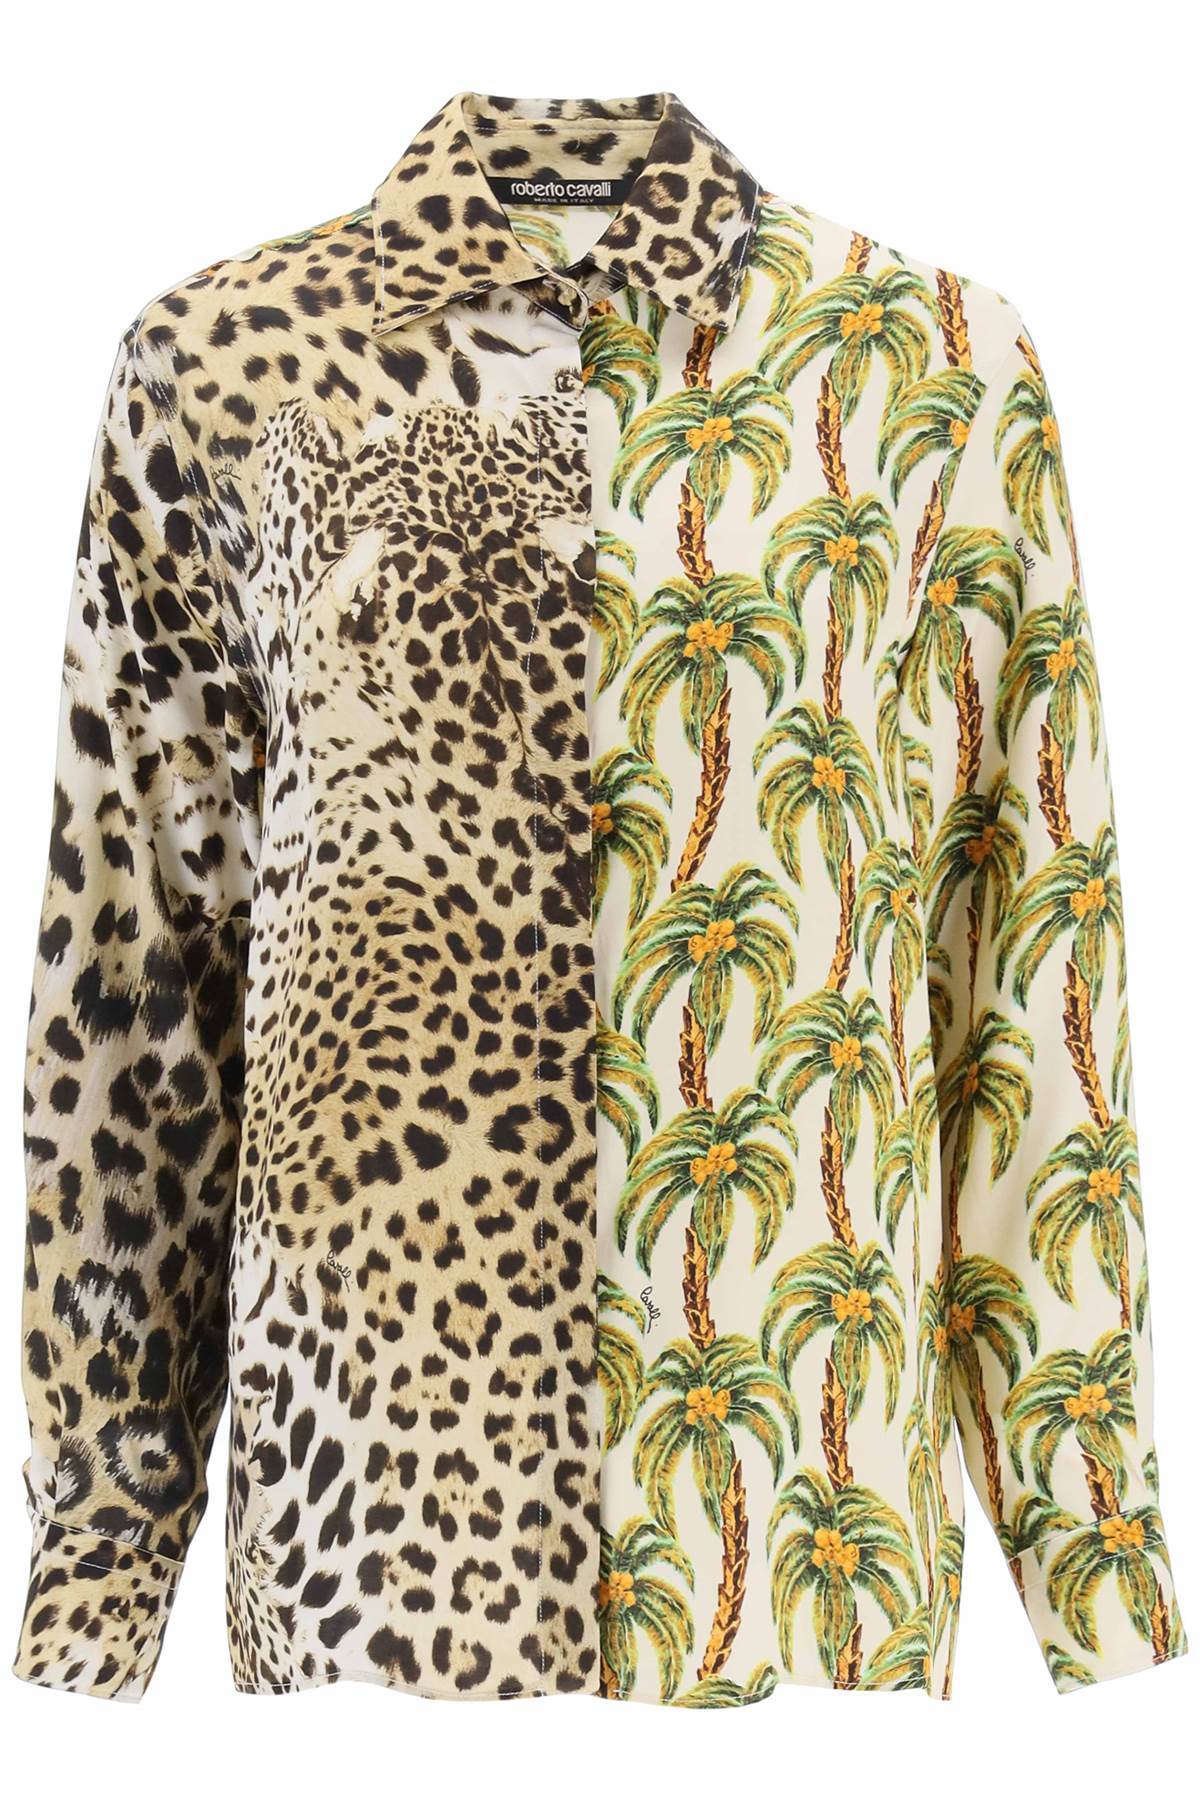 Roberto Cavalli Jaguar And Palm Tree Printed Shirt